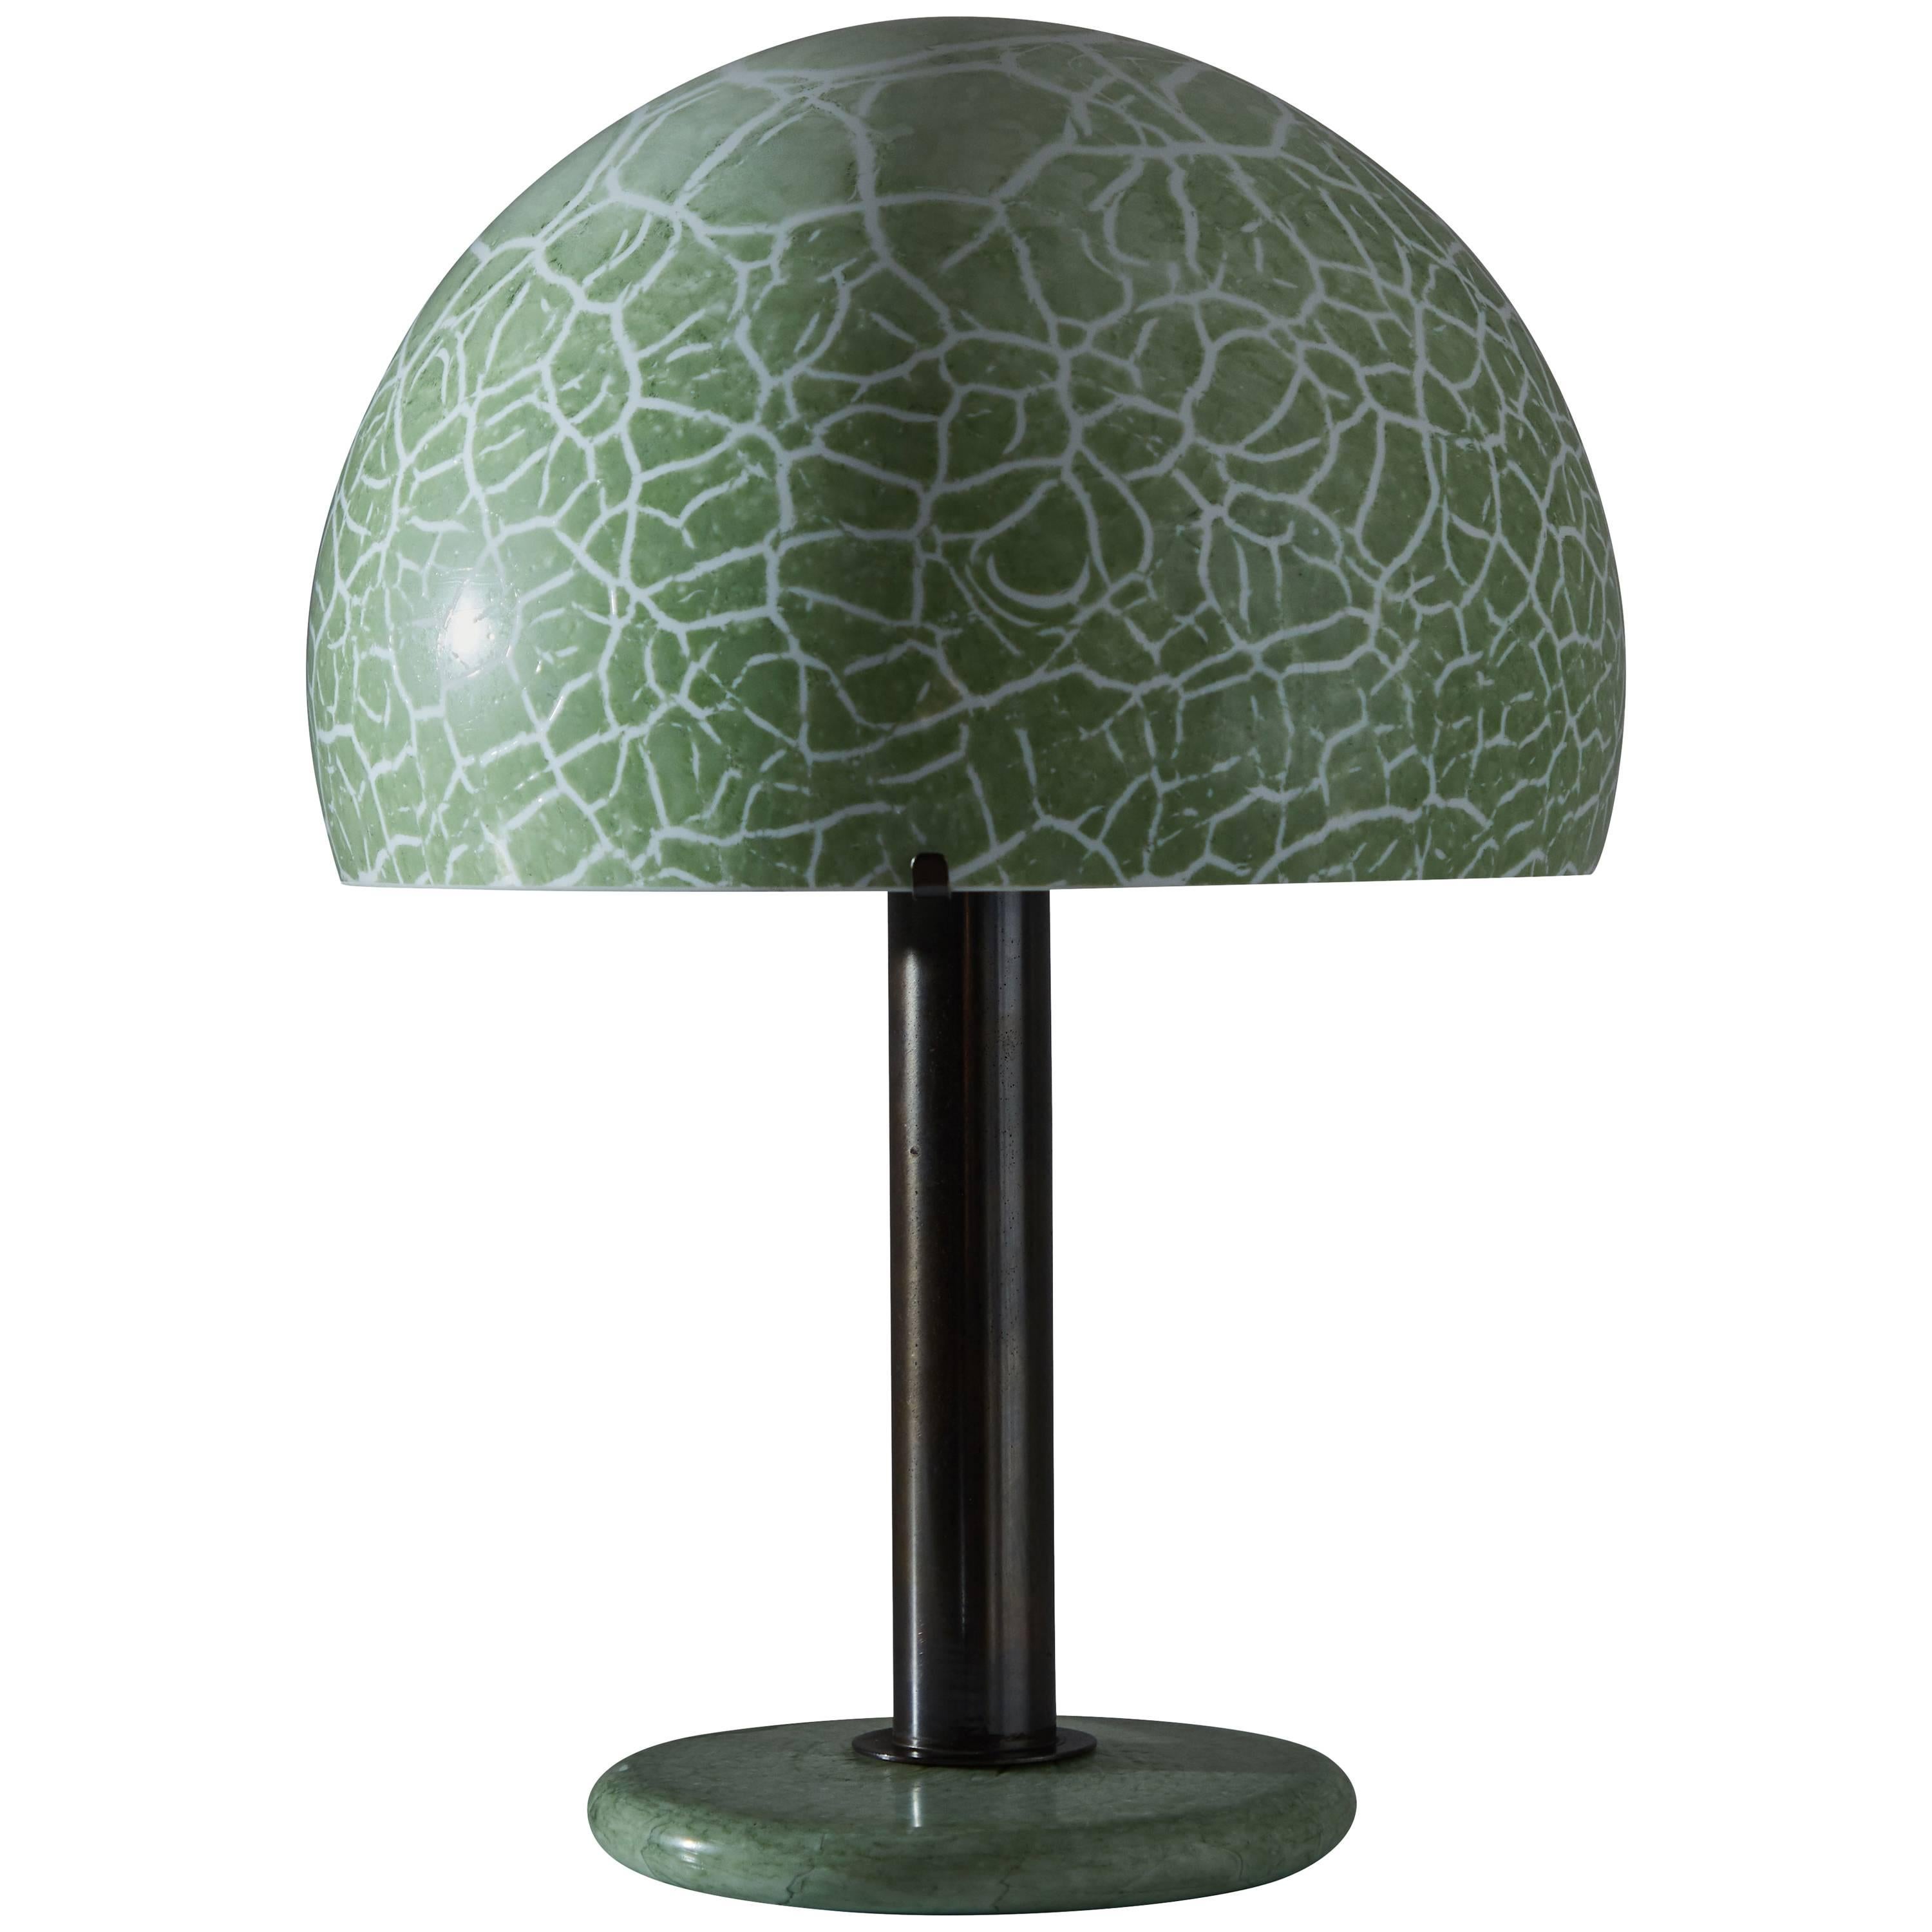 Model 832 Table Lamp by Venini